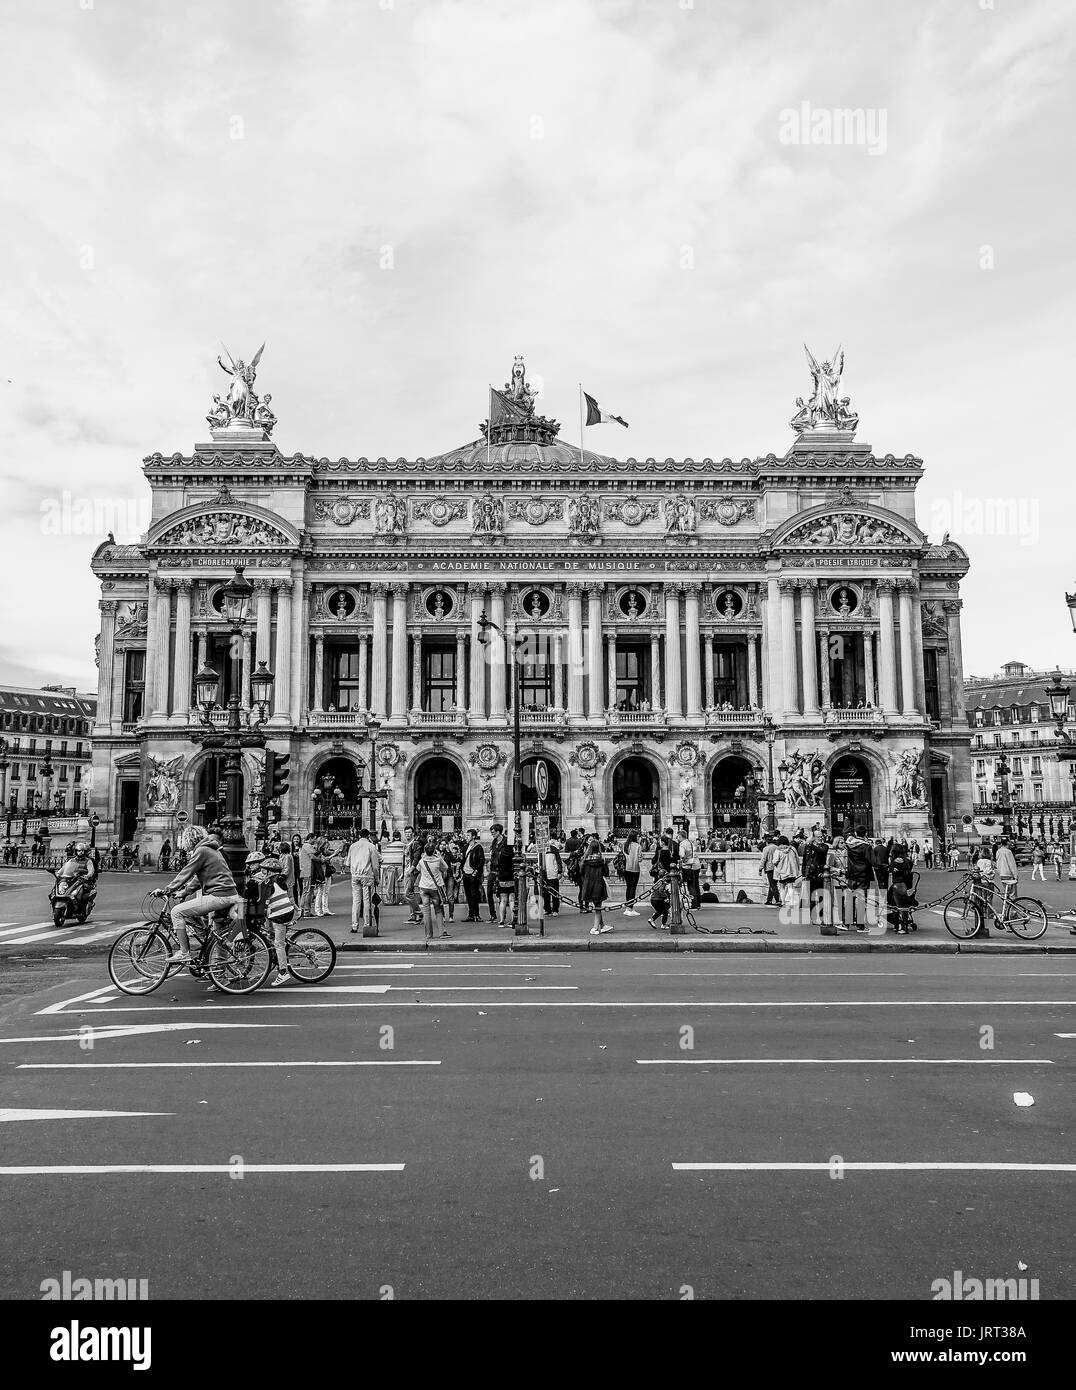 Paris Opera - National Music Academy - PARIS/FRANKREICH - 24. SEPTEMBER 2017 Stockfoto